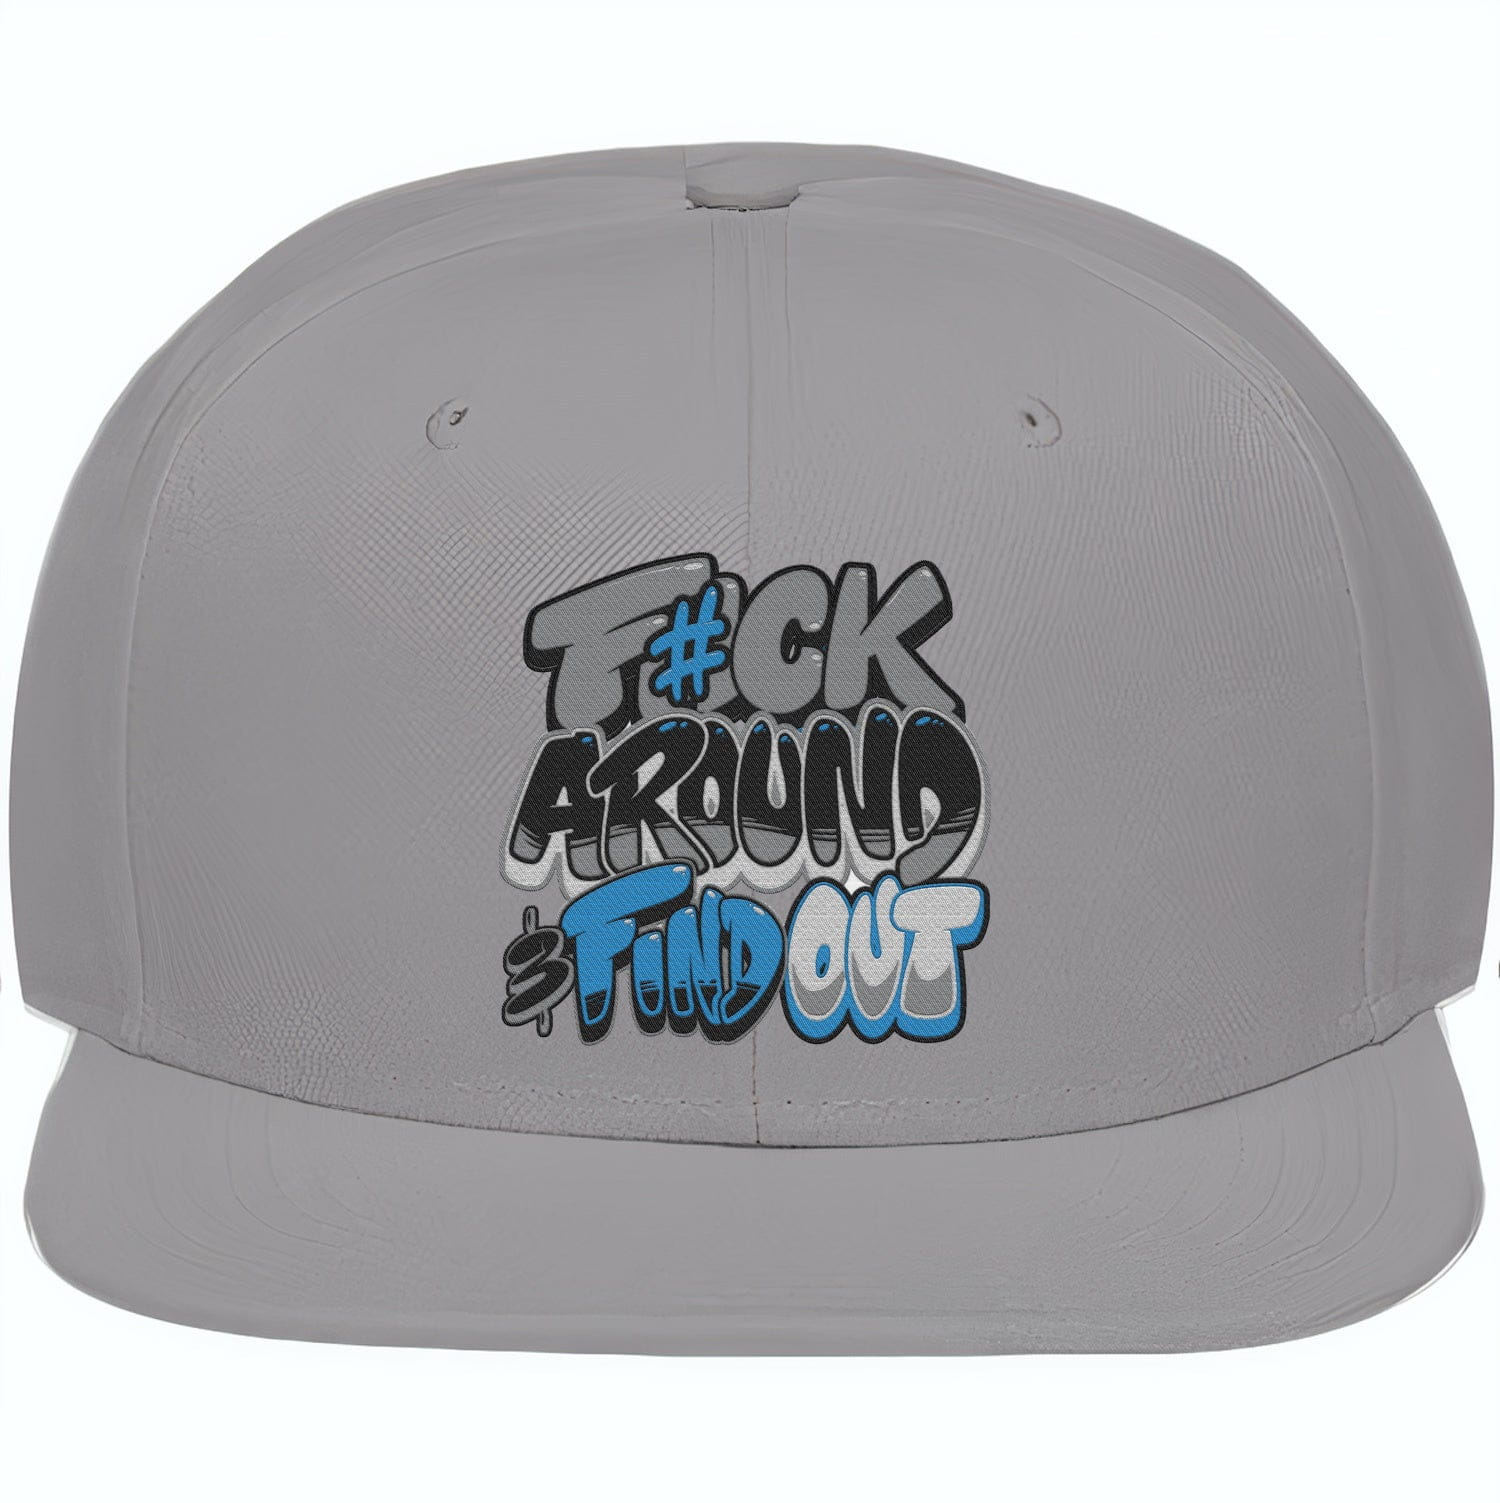 Jordan Powder Blue 9s Snapback Hats to Match - F#ck